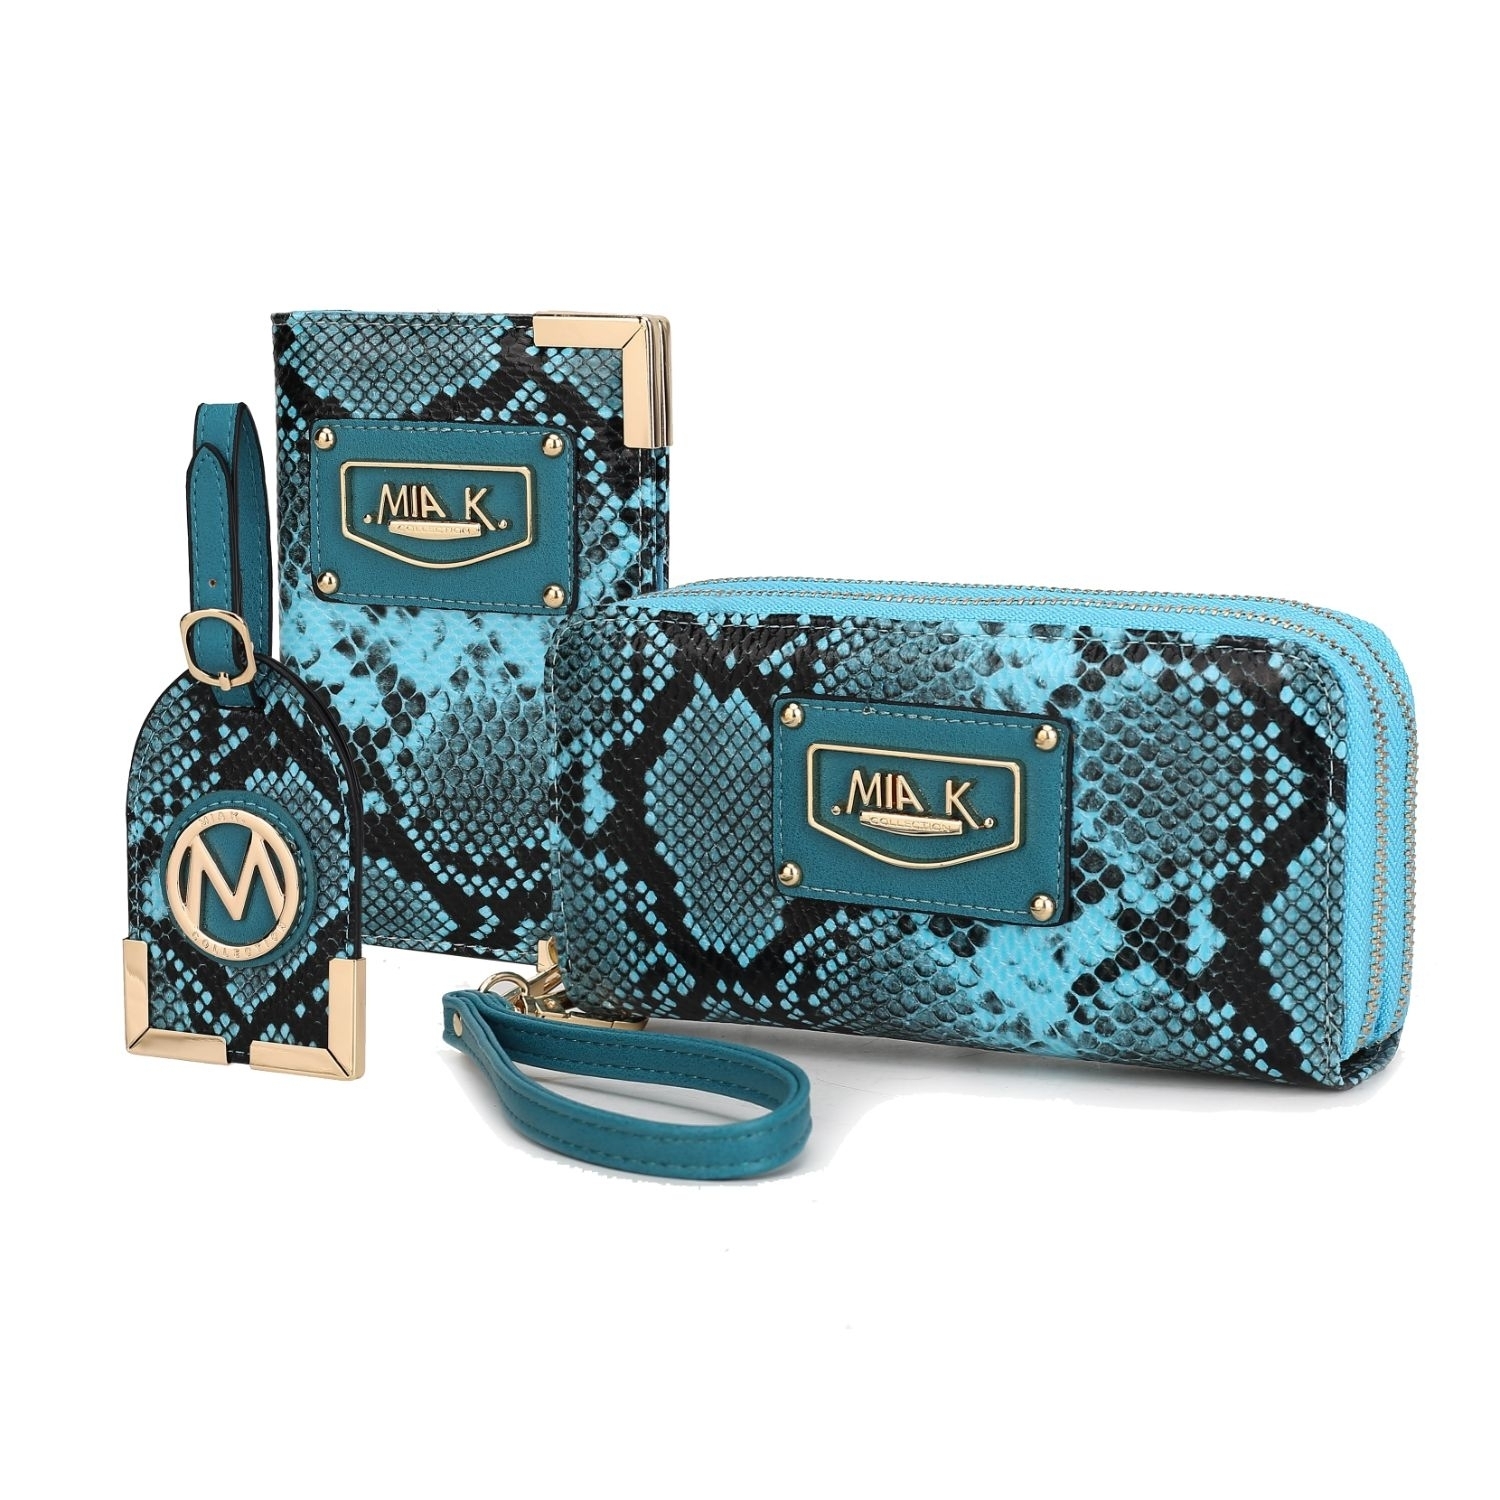 MKF Collection Darla Snake Travel Gift Set Handbag By Mia K 3 Pieces - Turquoise